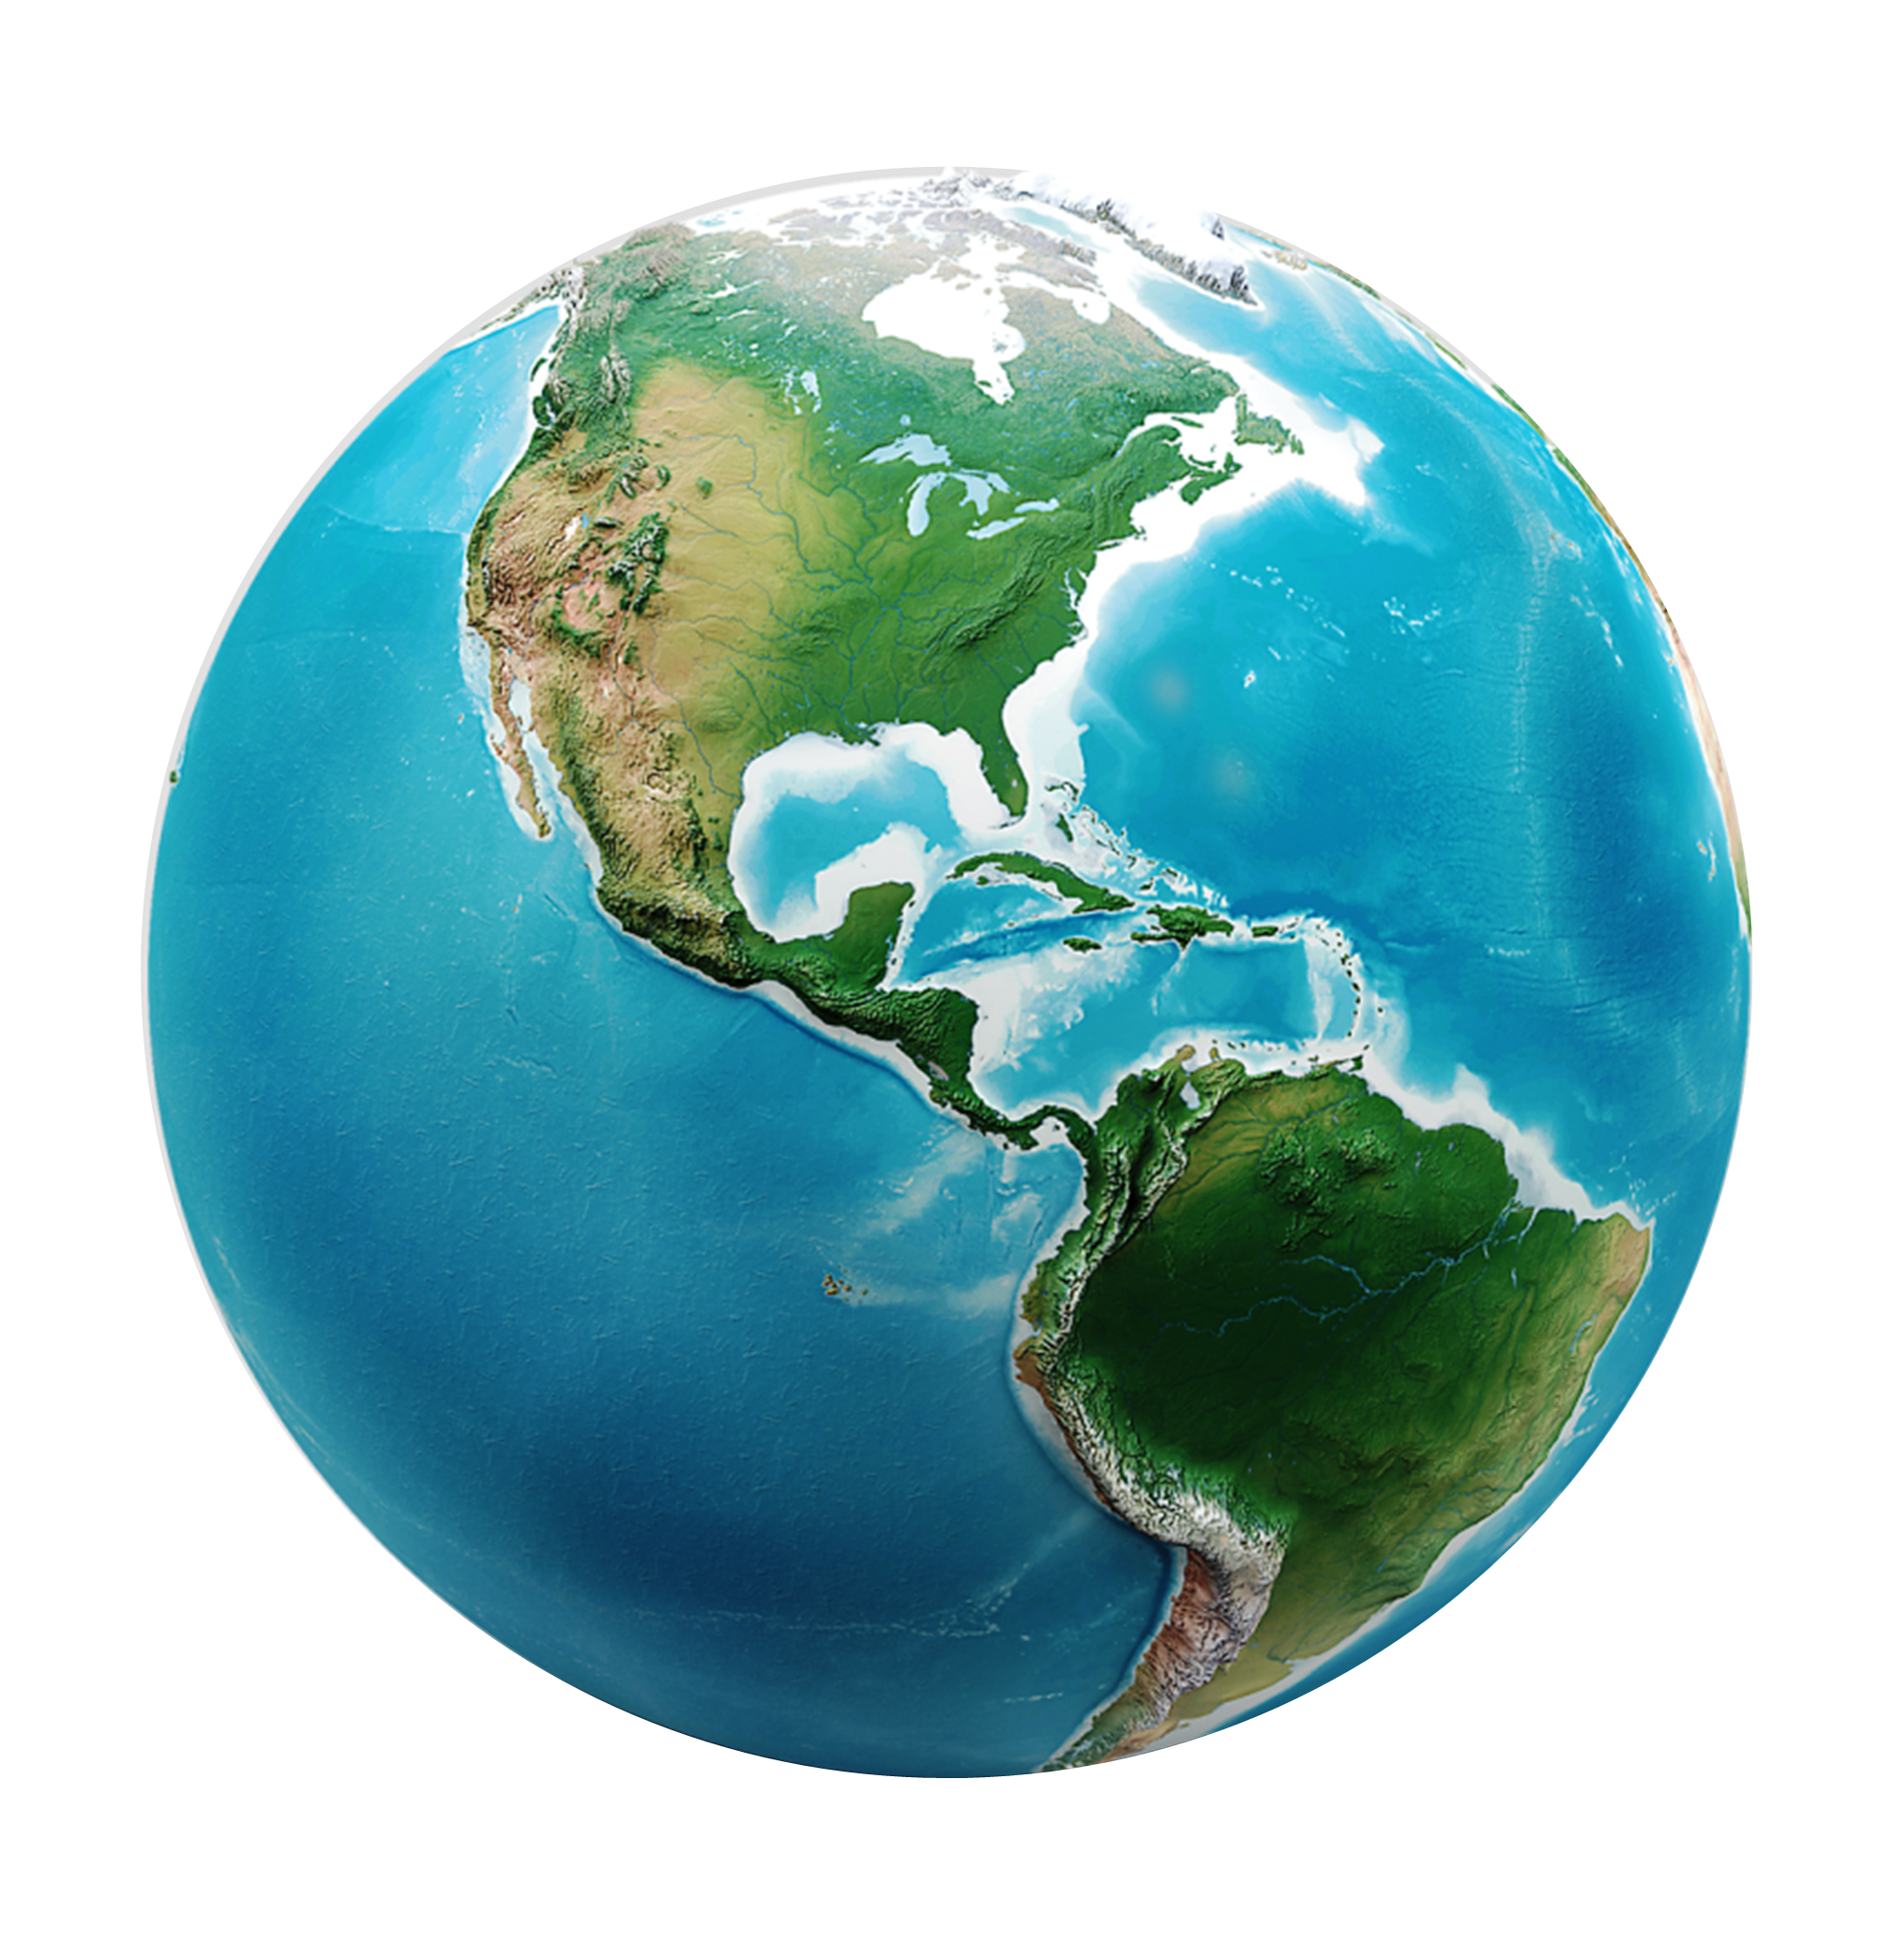 File:Globcal medium resolution globe.png - Wikimedia Commons